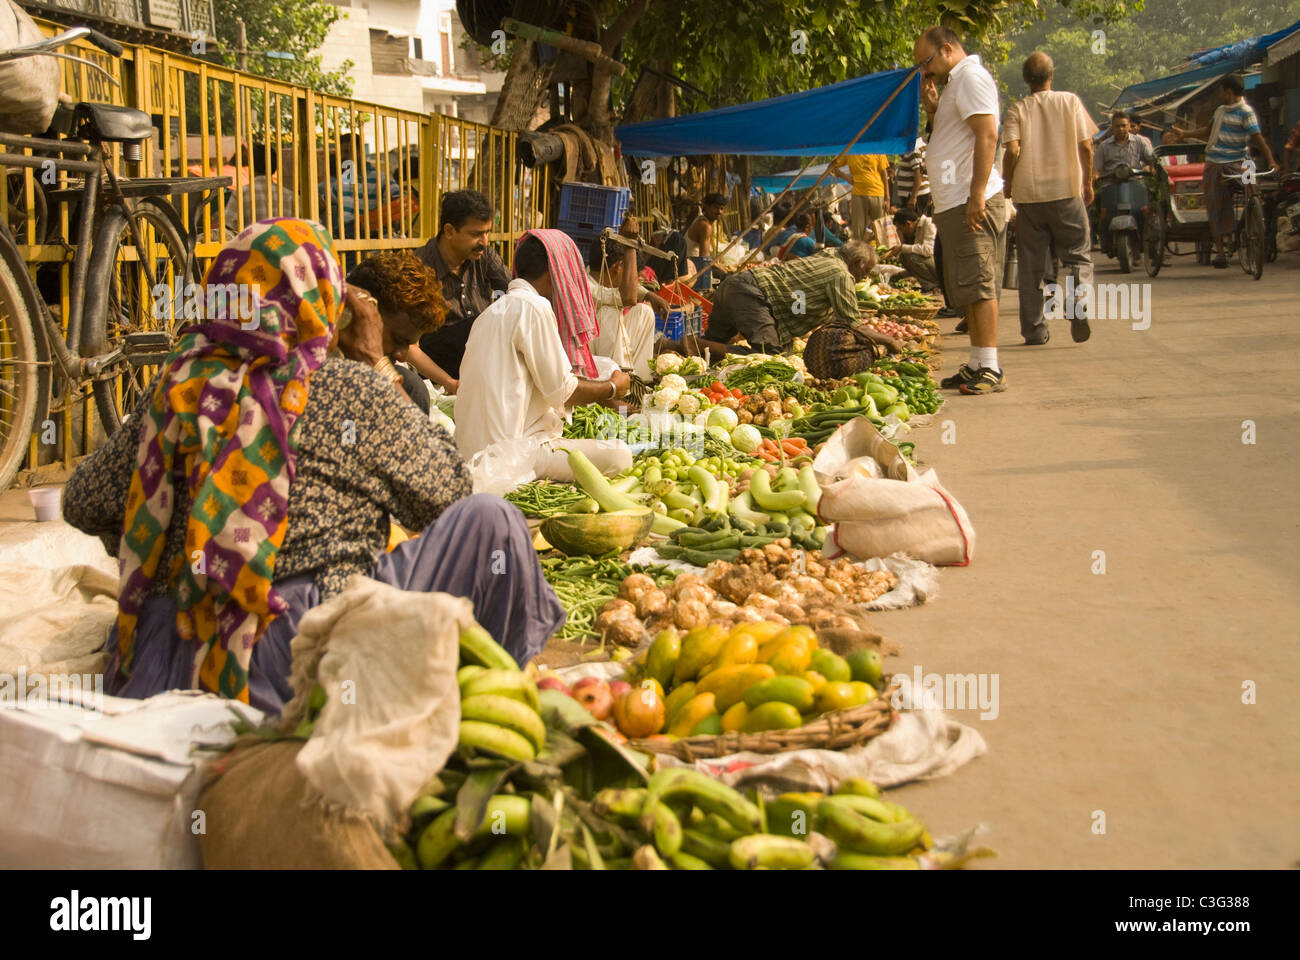 Market vendors selling vegetables at a market stall, Chandni Chowk, Delhi, India Stock Photo